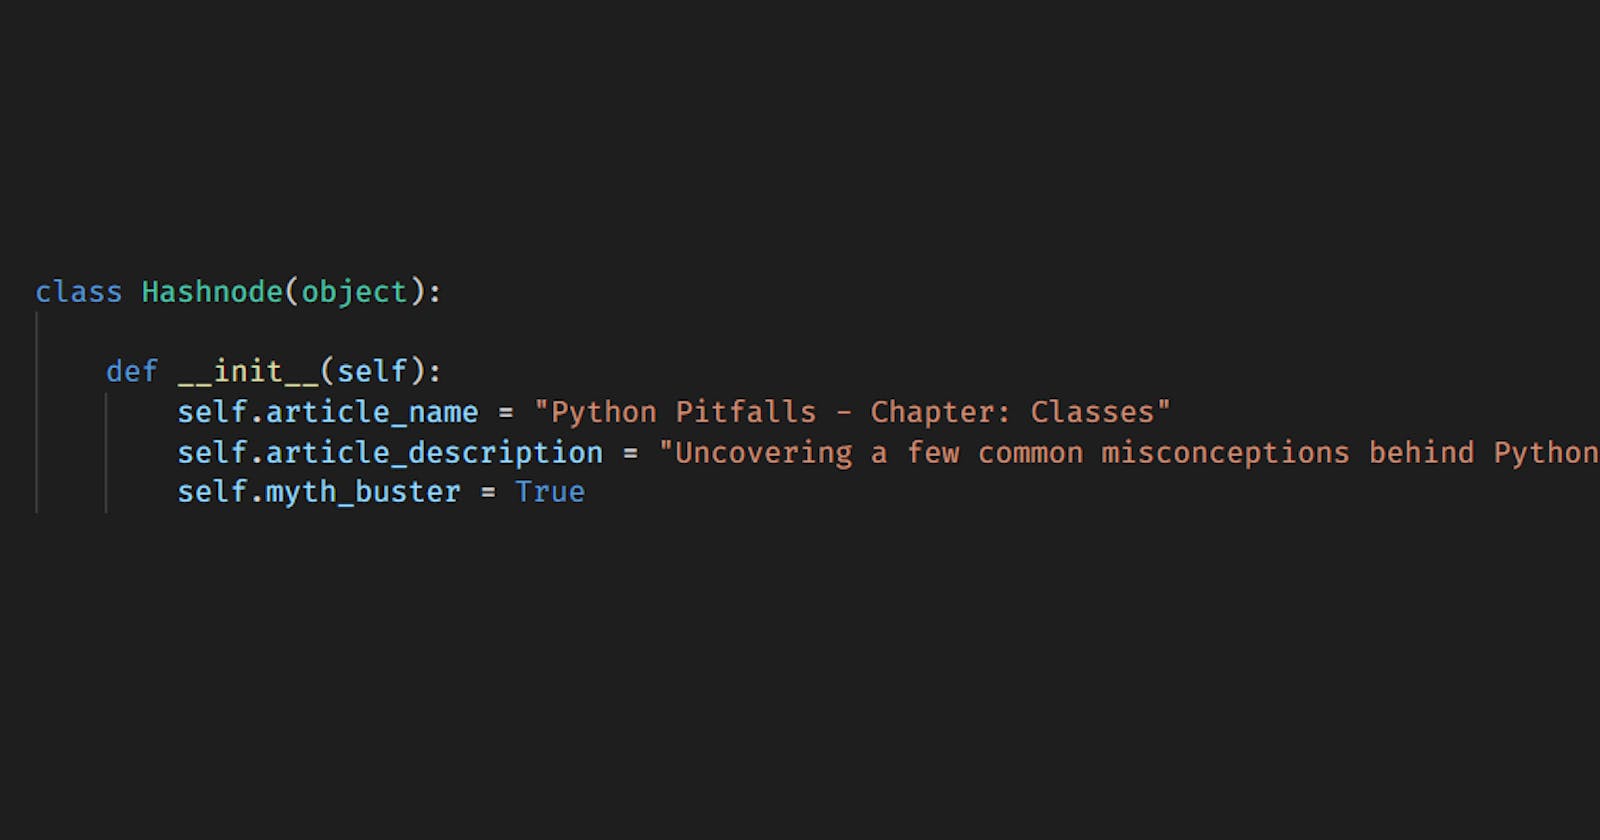 Python Pitfalls - Chapter: Classes